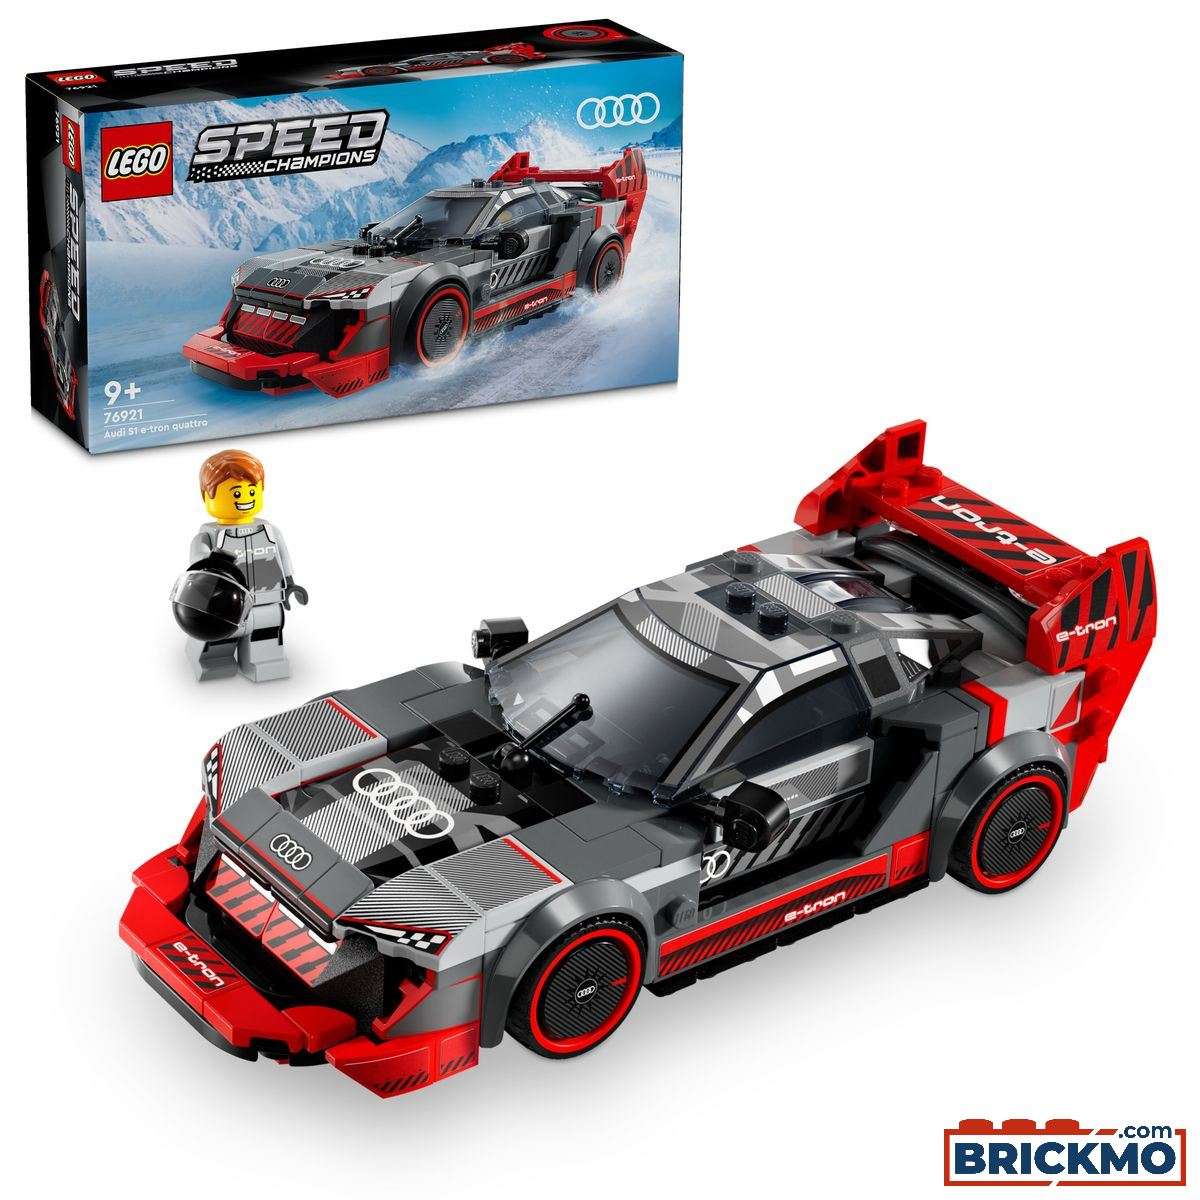 LEGO Speed Champions 76921 Závodní auto Audi S1 e-tron quattro 76921